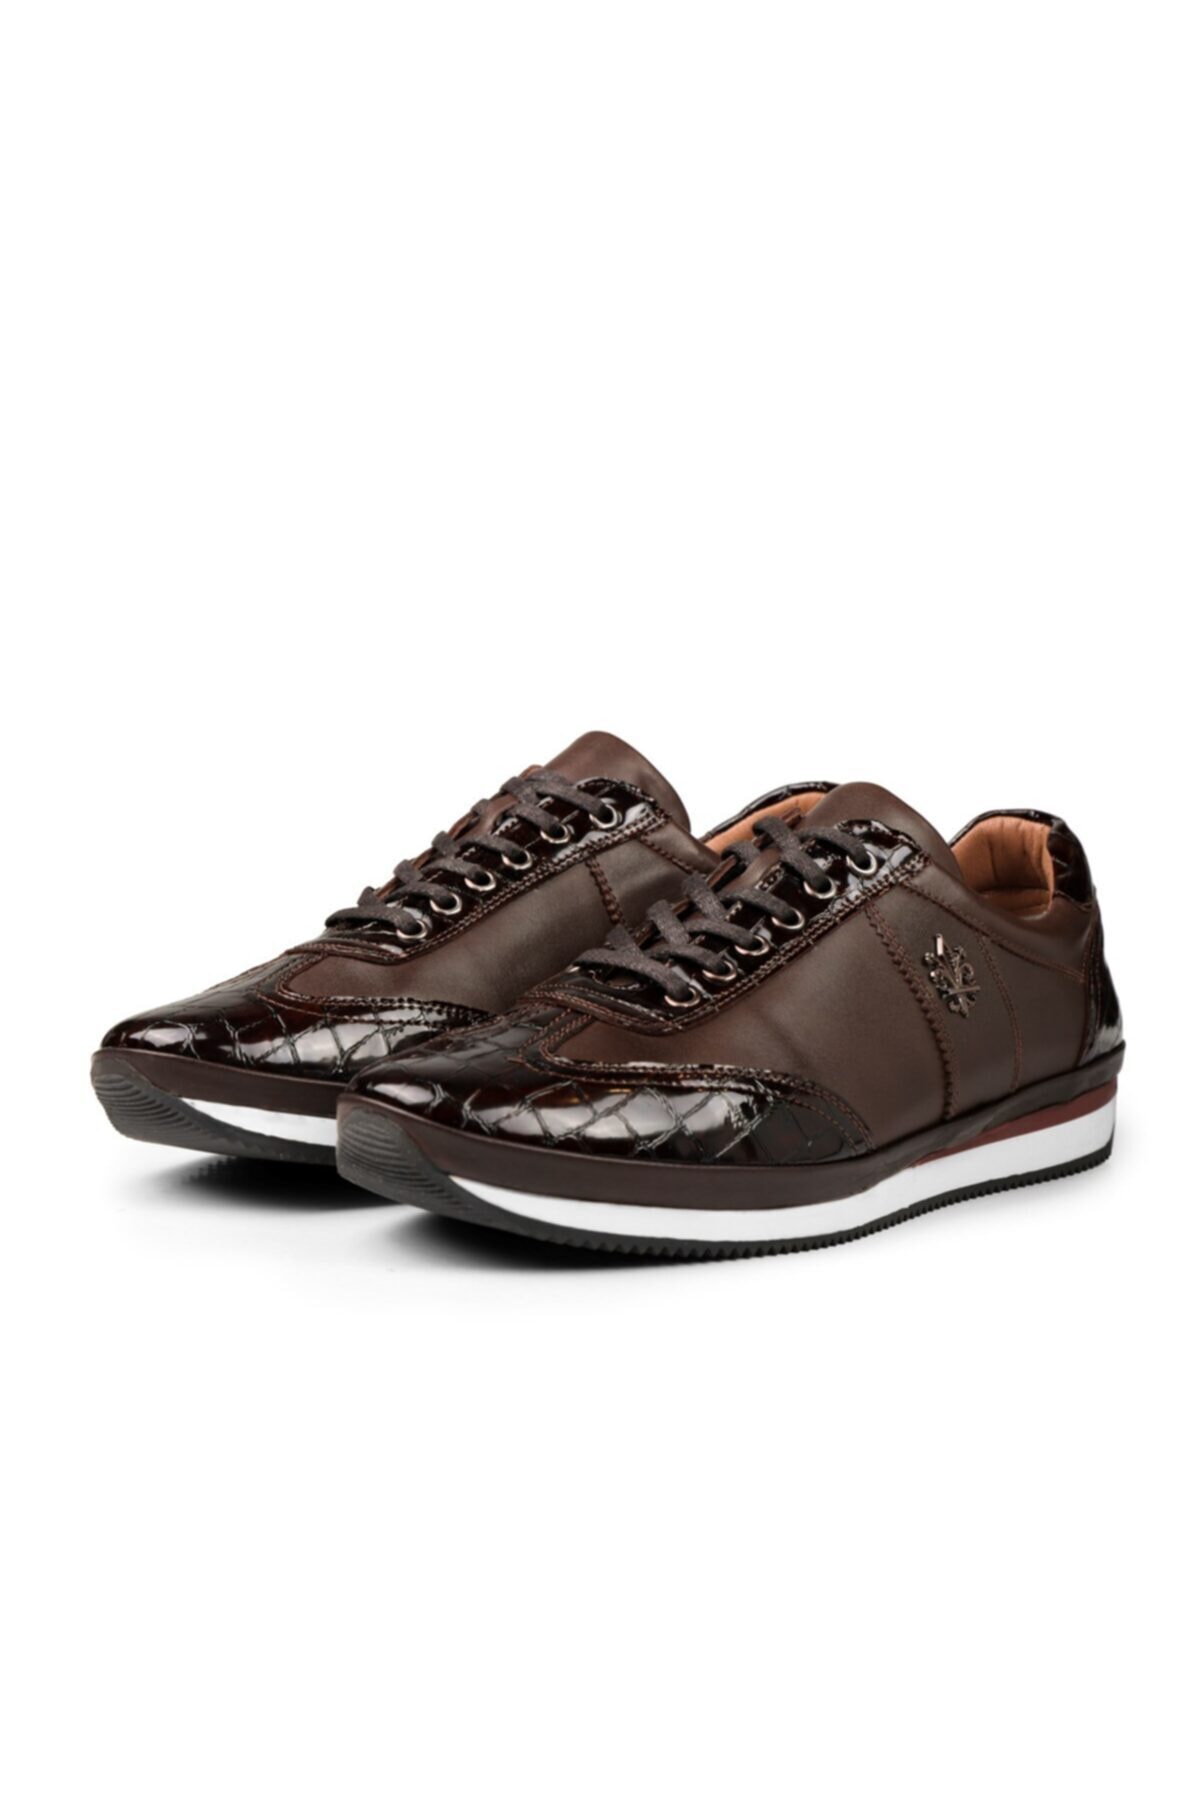 Levně Ducavelli Marvelous Genuine Leather Men's Casual Shoes Brown